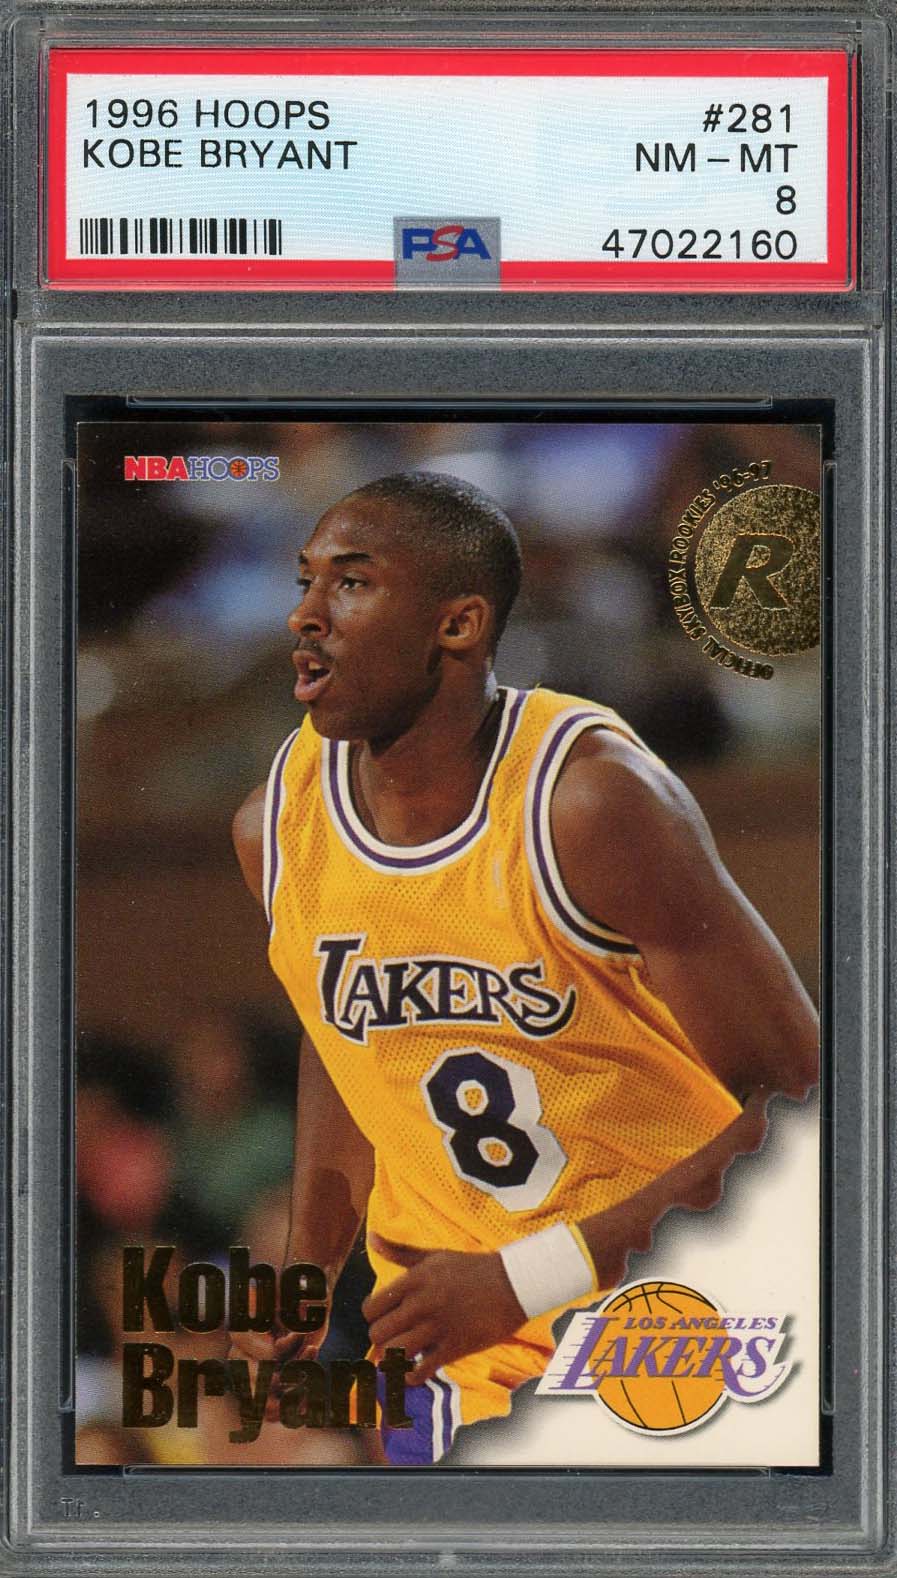 Kobe Bryant 1996 Hoops Rookie Basketball Card RC #281 Graded PSA 8